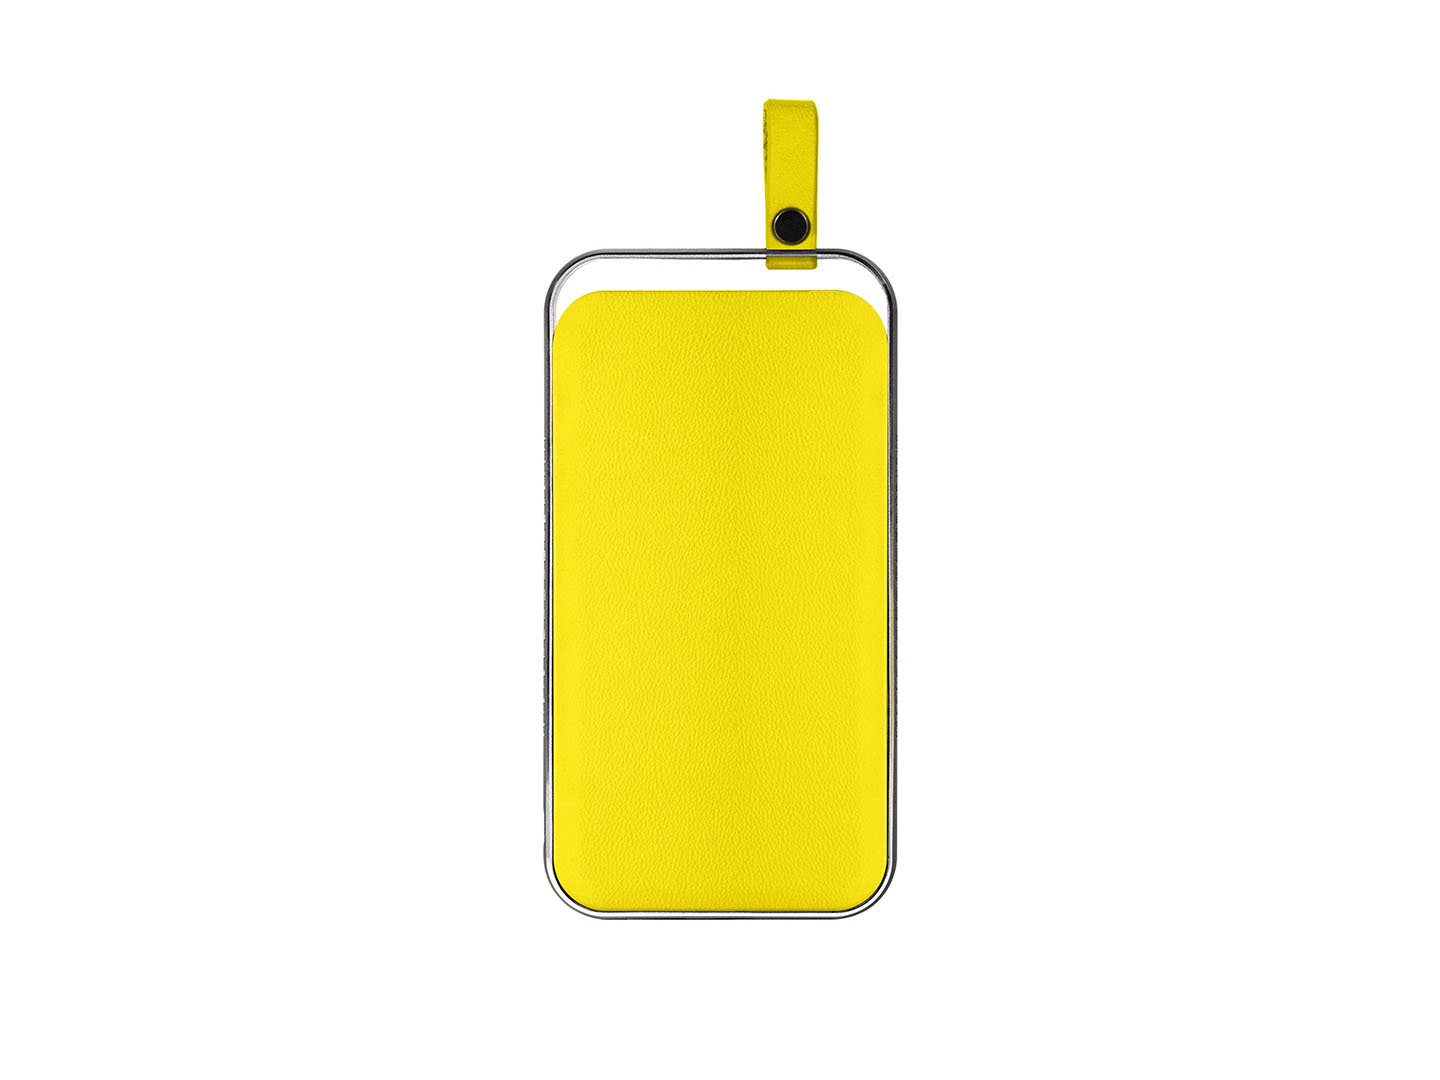 NEO Electron Yellow Портативный аккумулятор
10 000 мАч • Быстрая зарядка